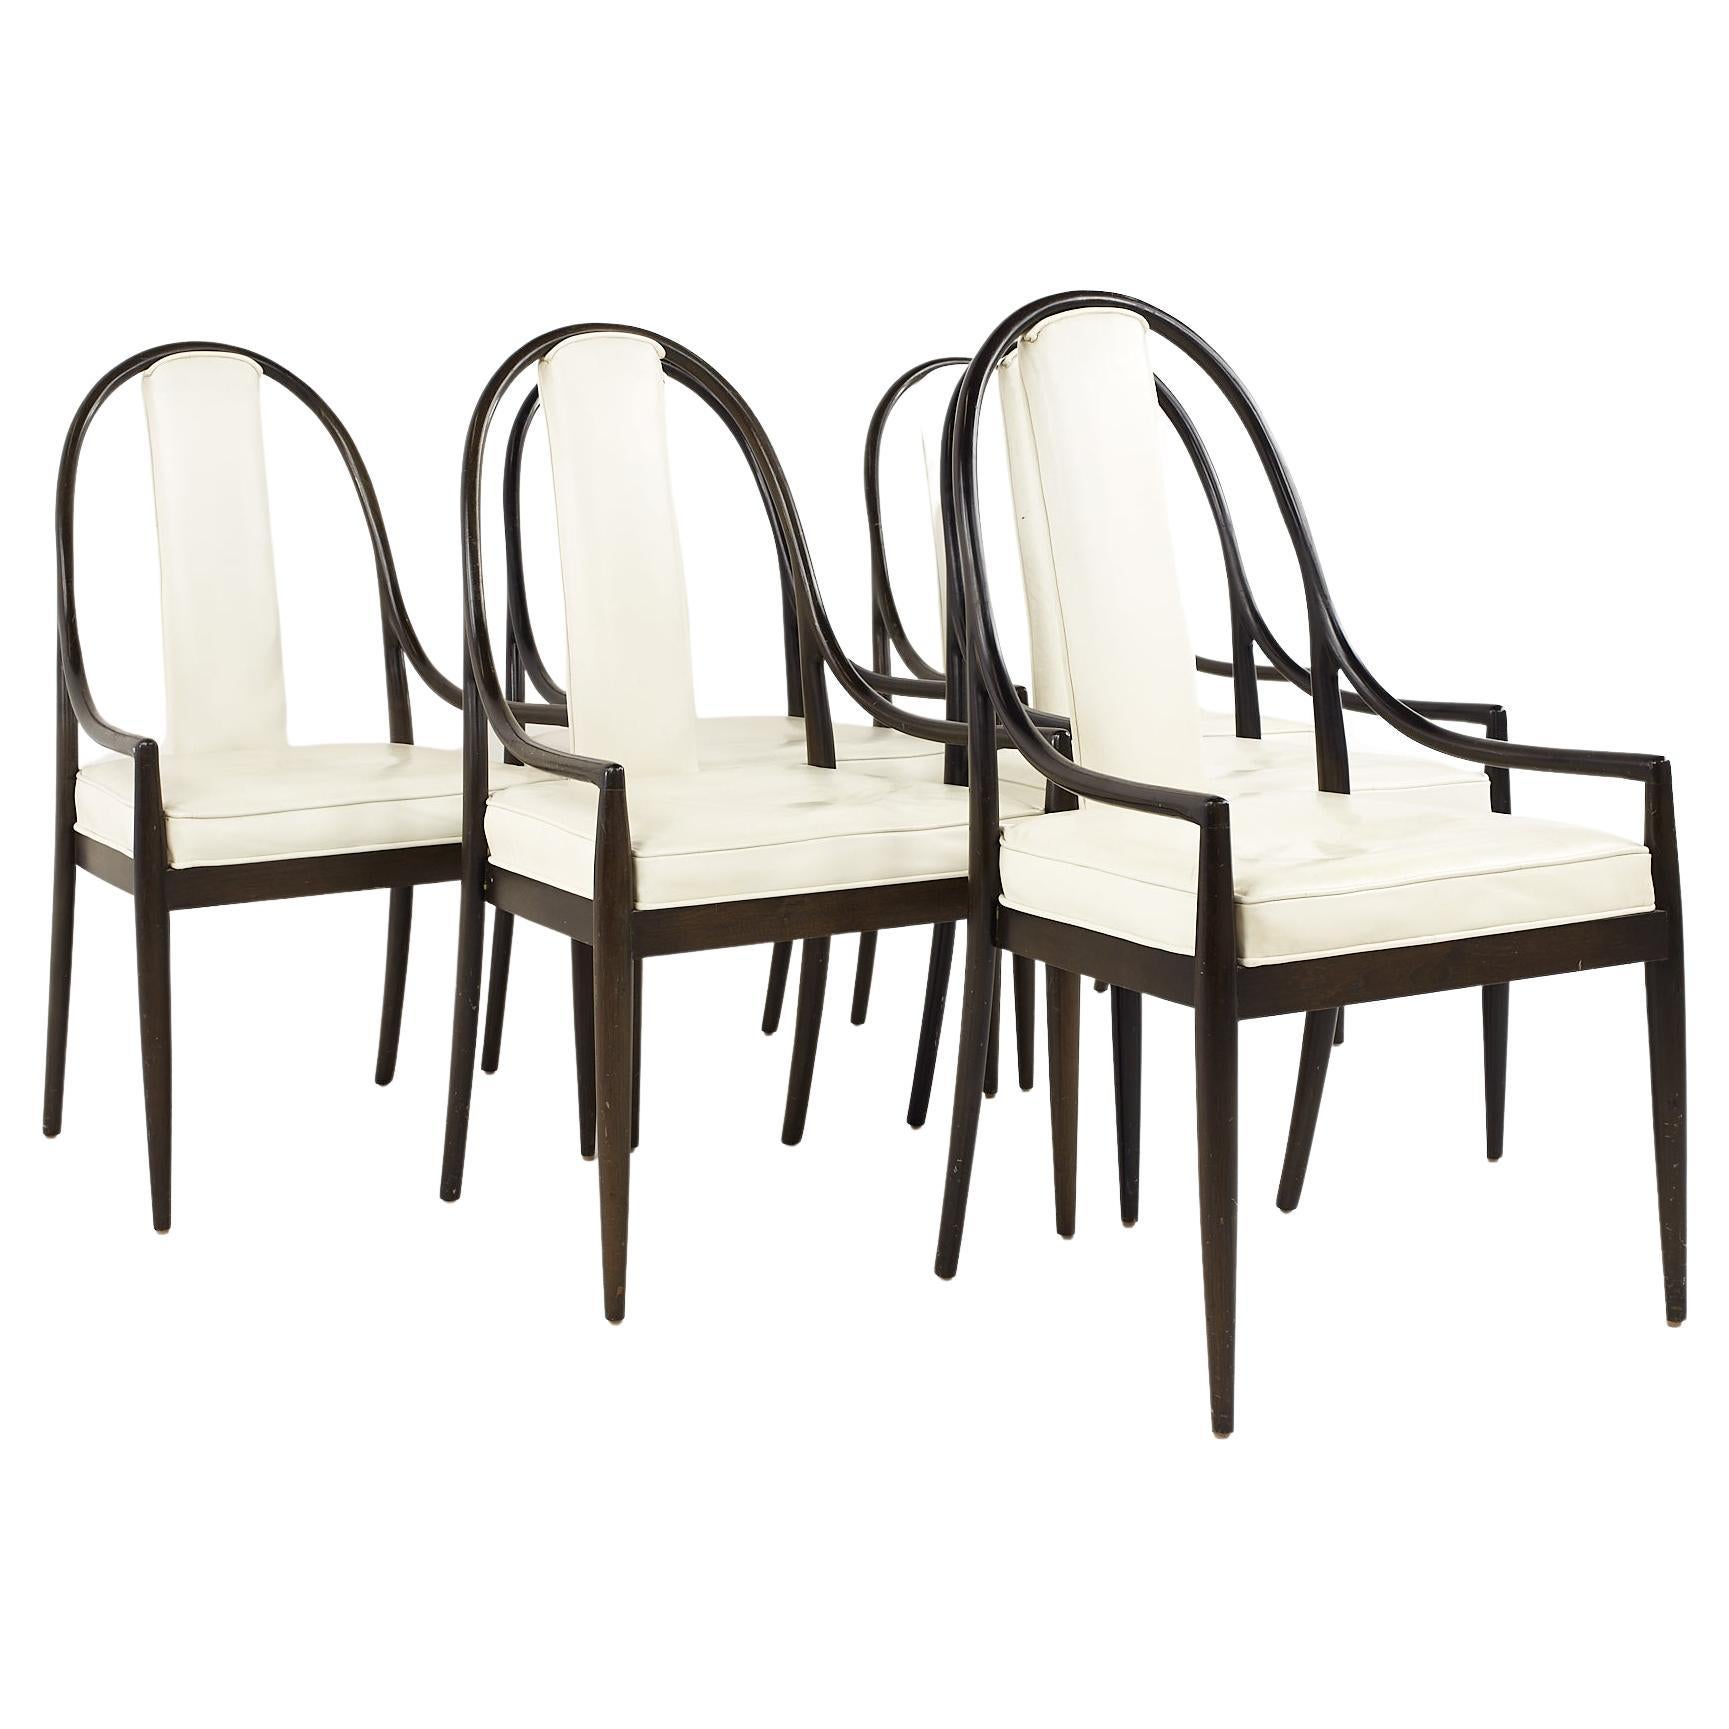 Gerry Zanck for Gregori Mid-Century Ebonized Walnut Dining Chairs, Set of 6